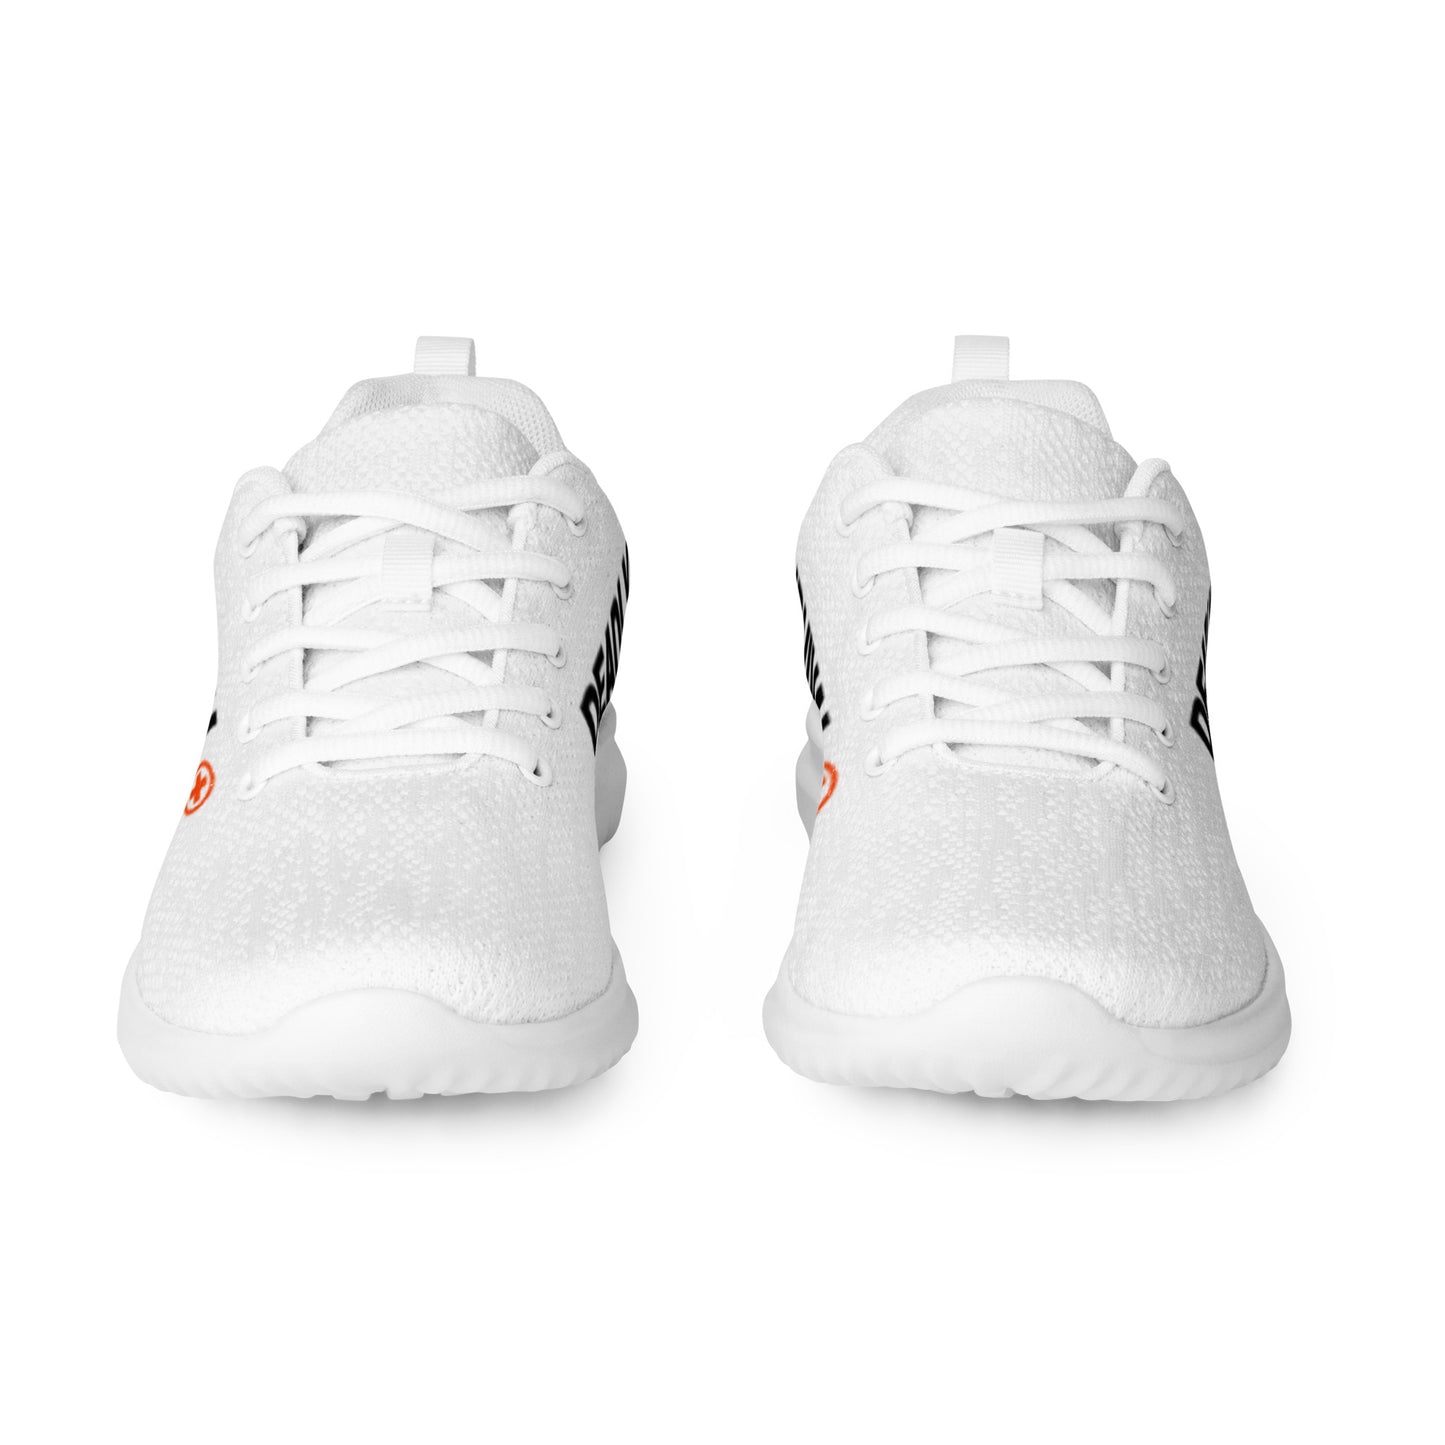 DAOS 2 Sneakers (White) deadlyartofsurvival.com